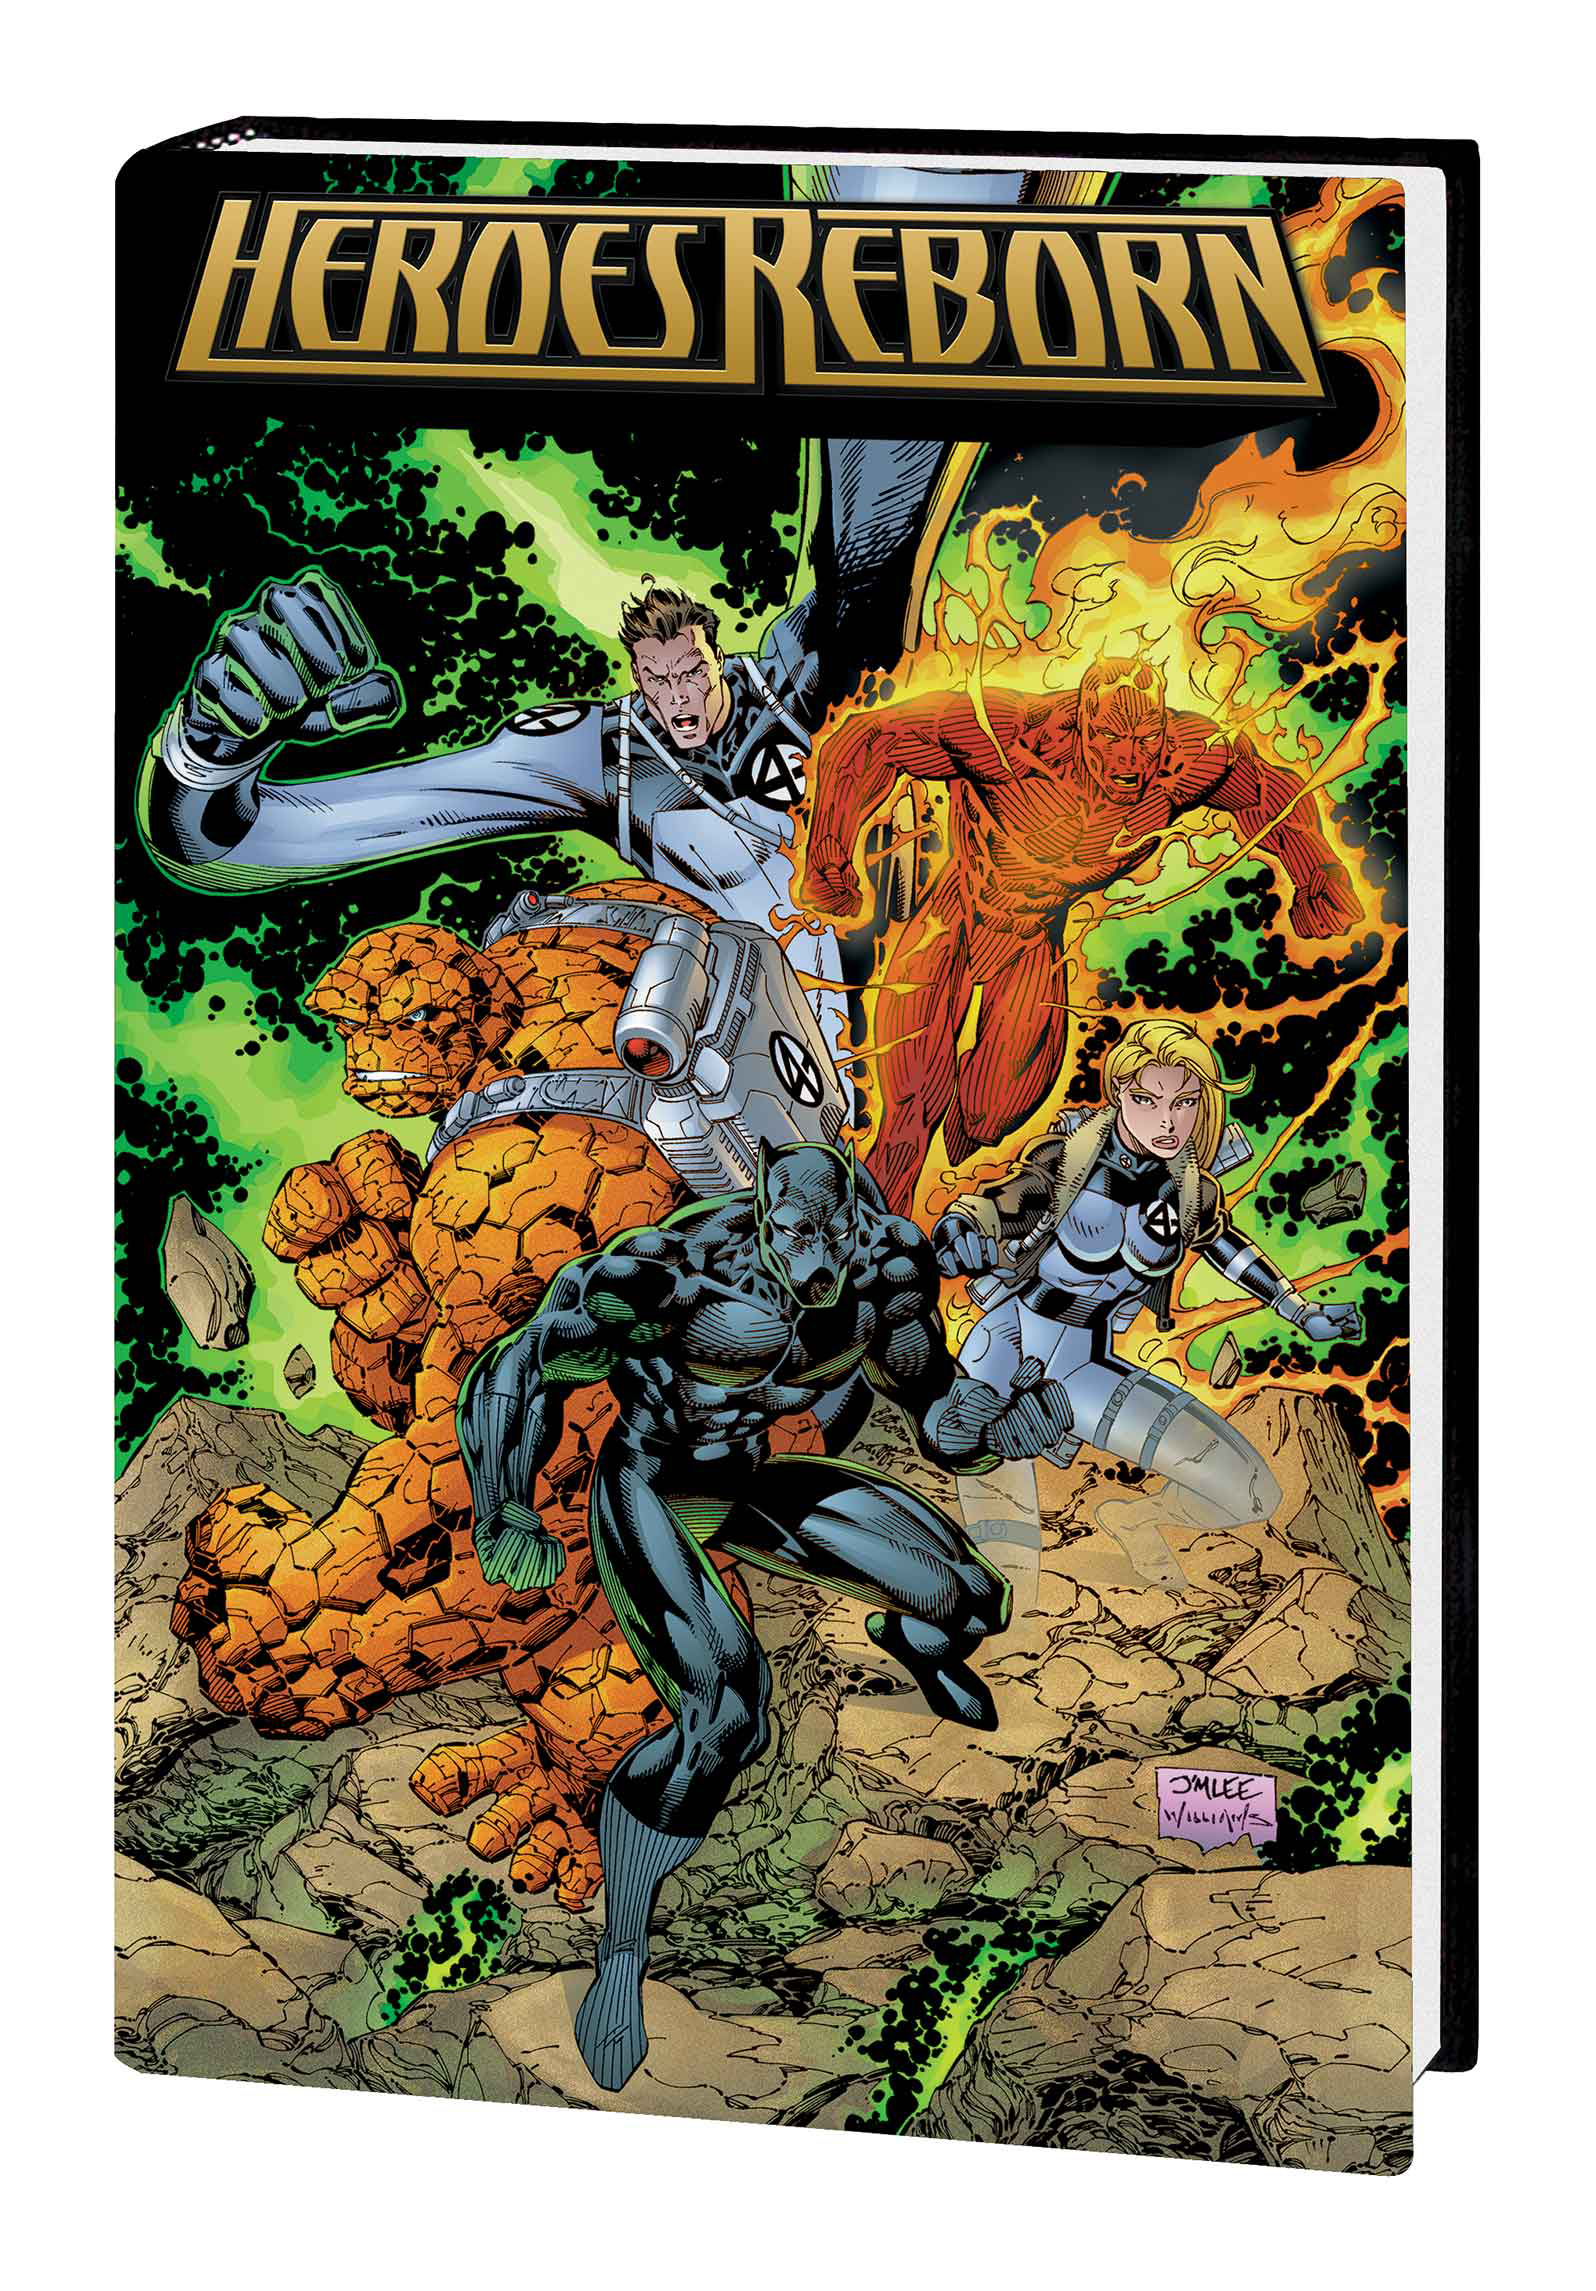 Heroes Reborn Omnibus Hardcover Lee Direct Market Variant New Printing